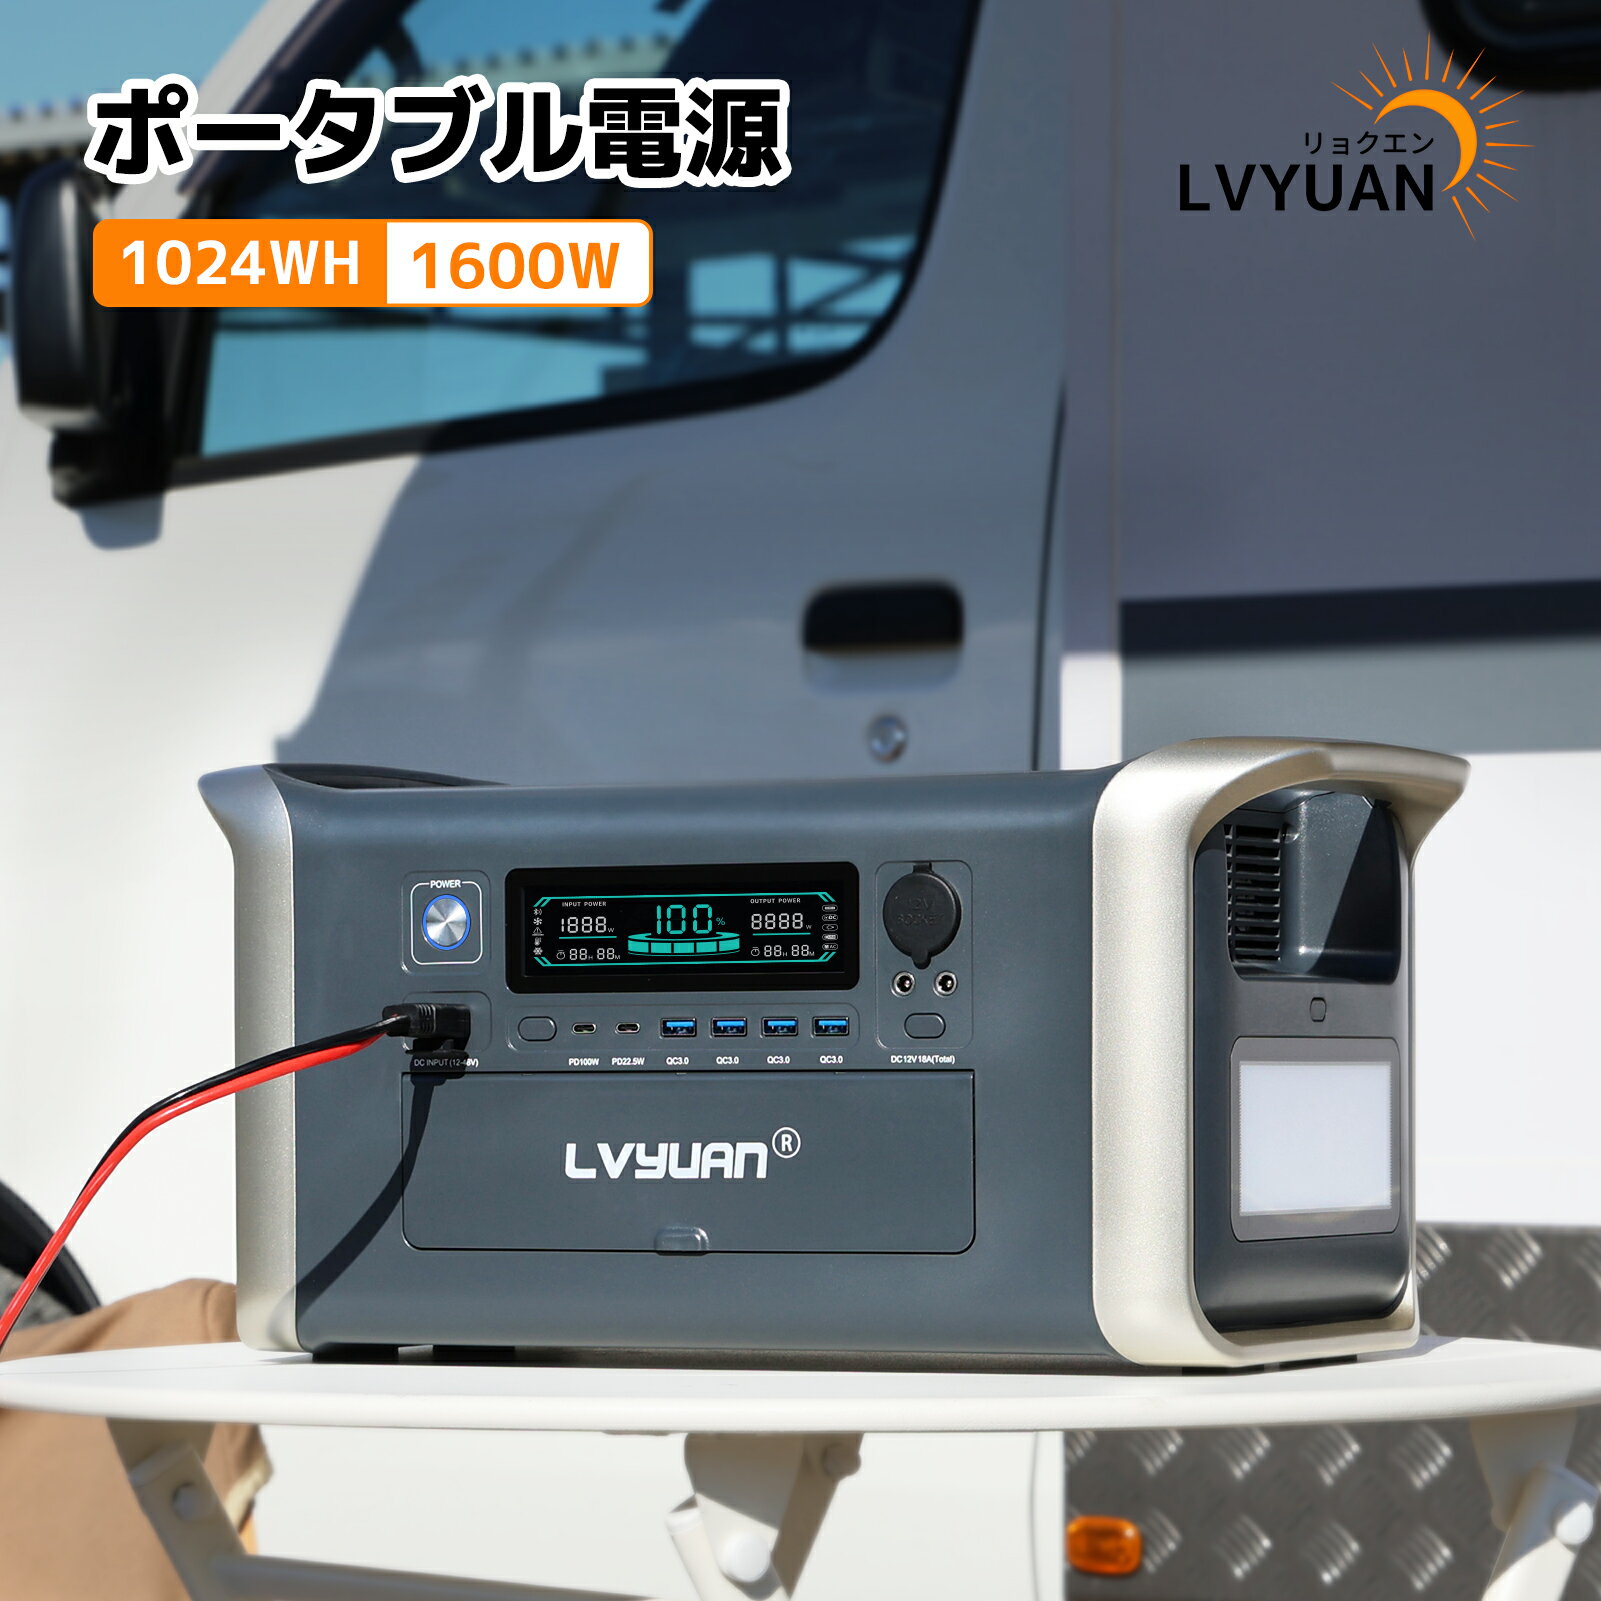 LVYUAN(リョクエン) ポータブル電源 大容量 1024WH リン酸鉄リチウムイオン電池 (LiFePO4) 純正弦 AC1600W(瞬間最大3200W) 50/60Hz MPPT制御 UPS パススルー機能搭載 家庭/アウトドア用 バックアップ電源 車中泊 防災 非常用電源